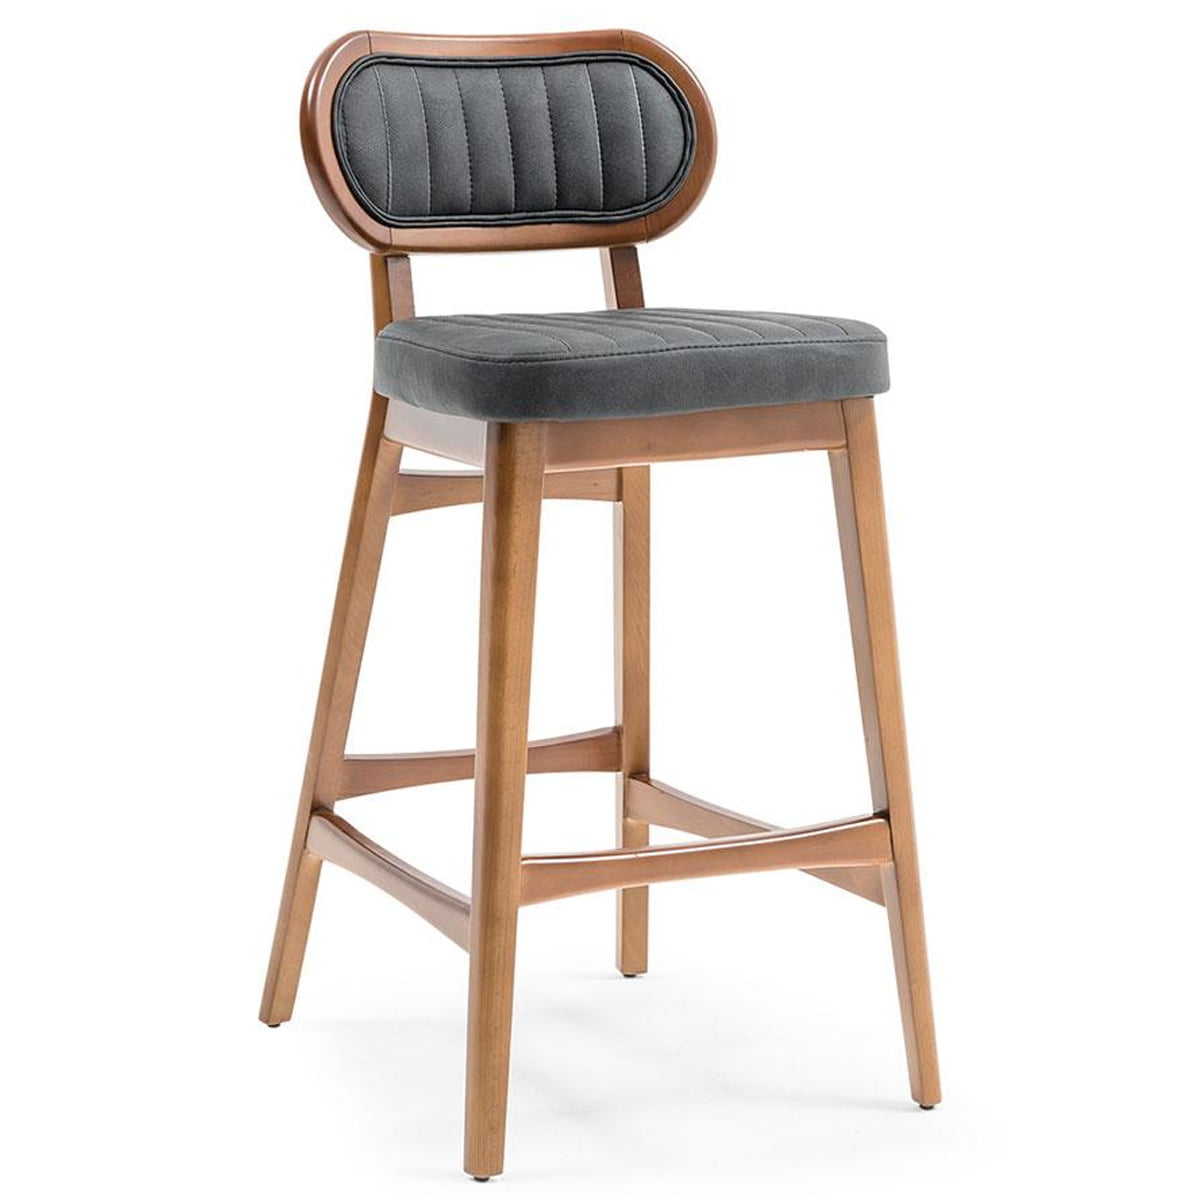 Wood Upholstered Side Chair for Restaurant/Bar/Cafe/Home 